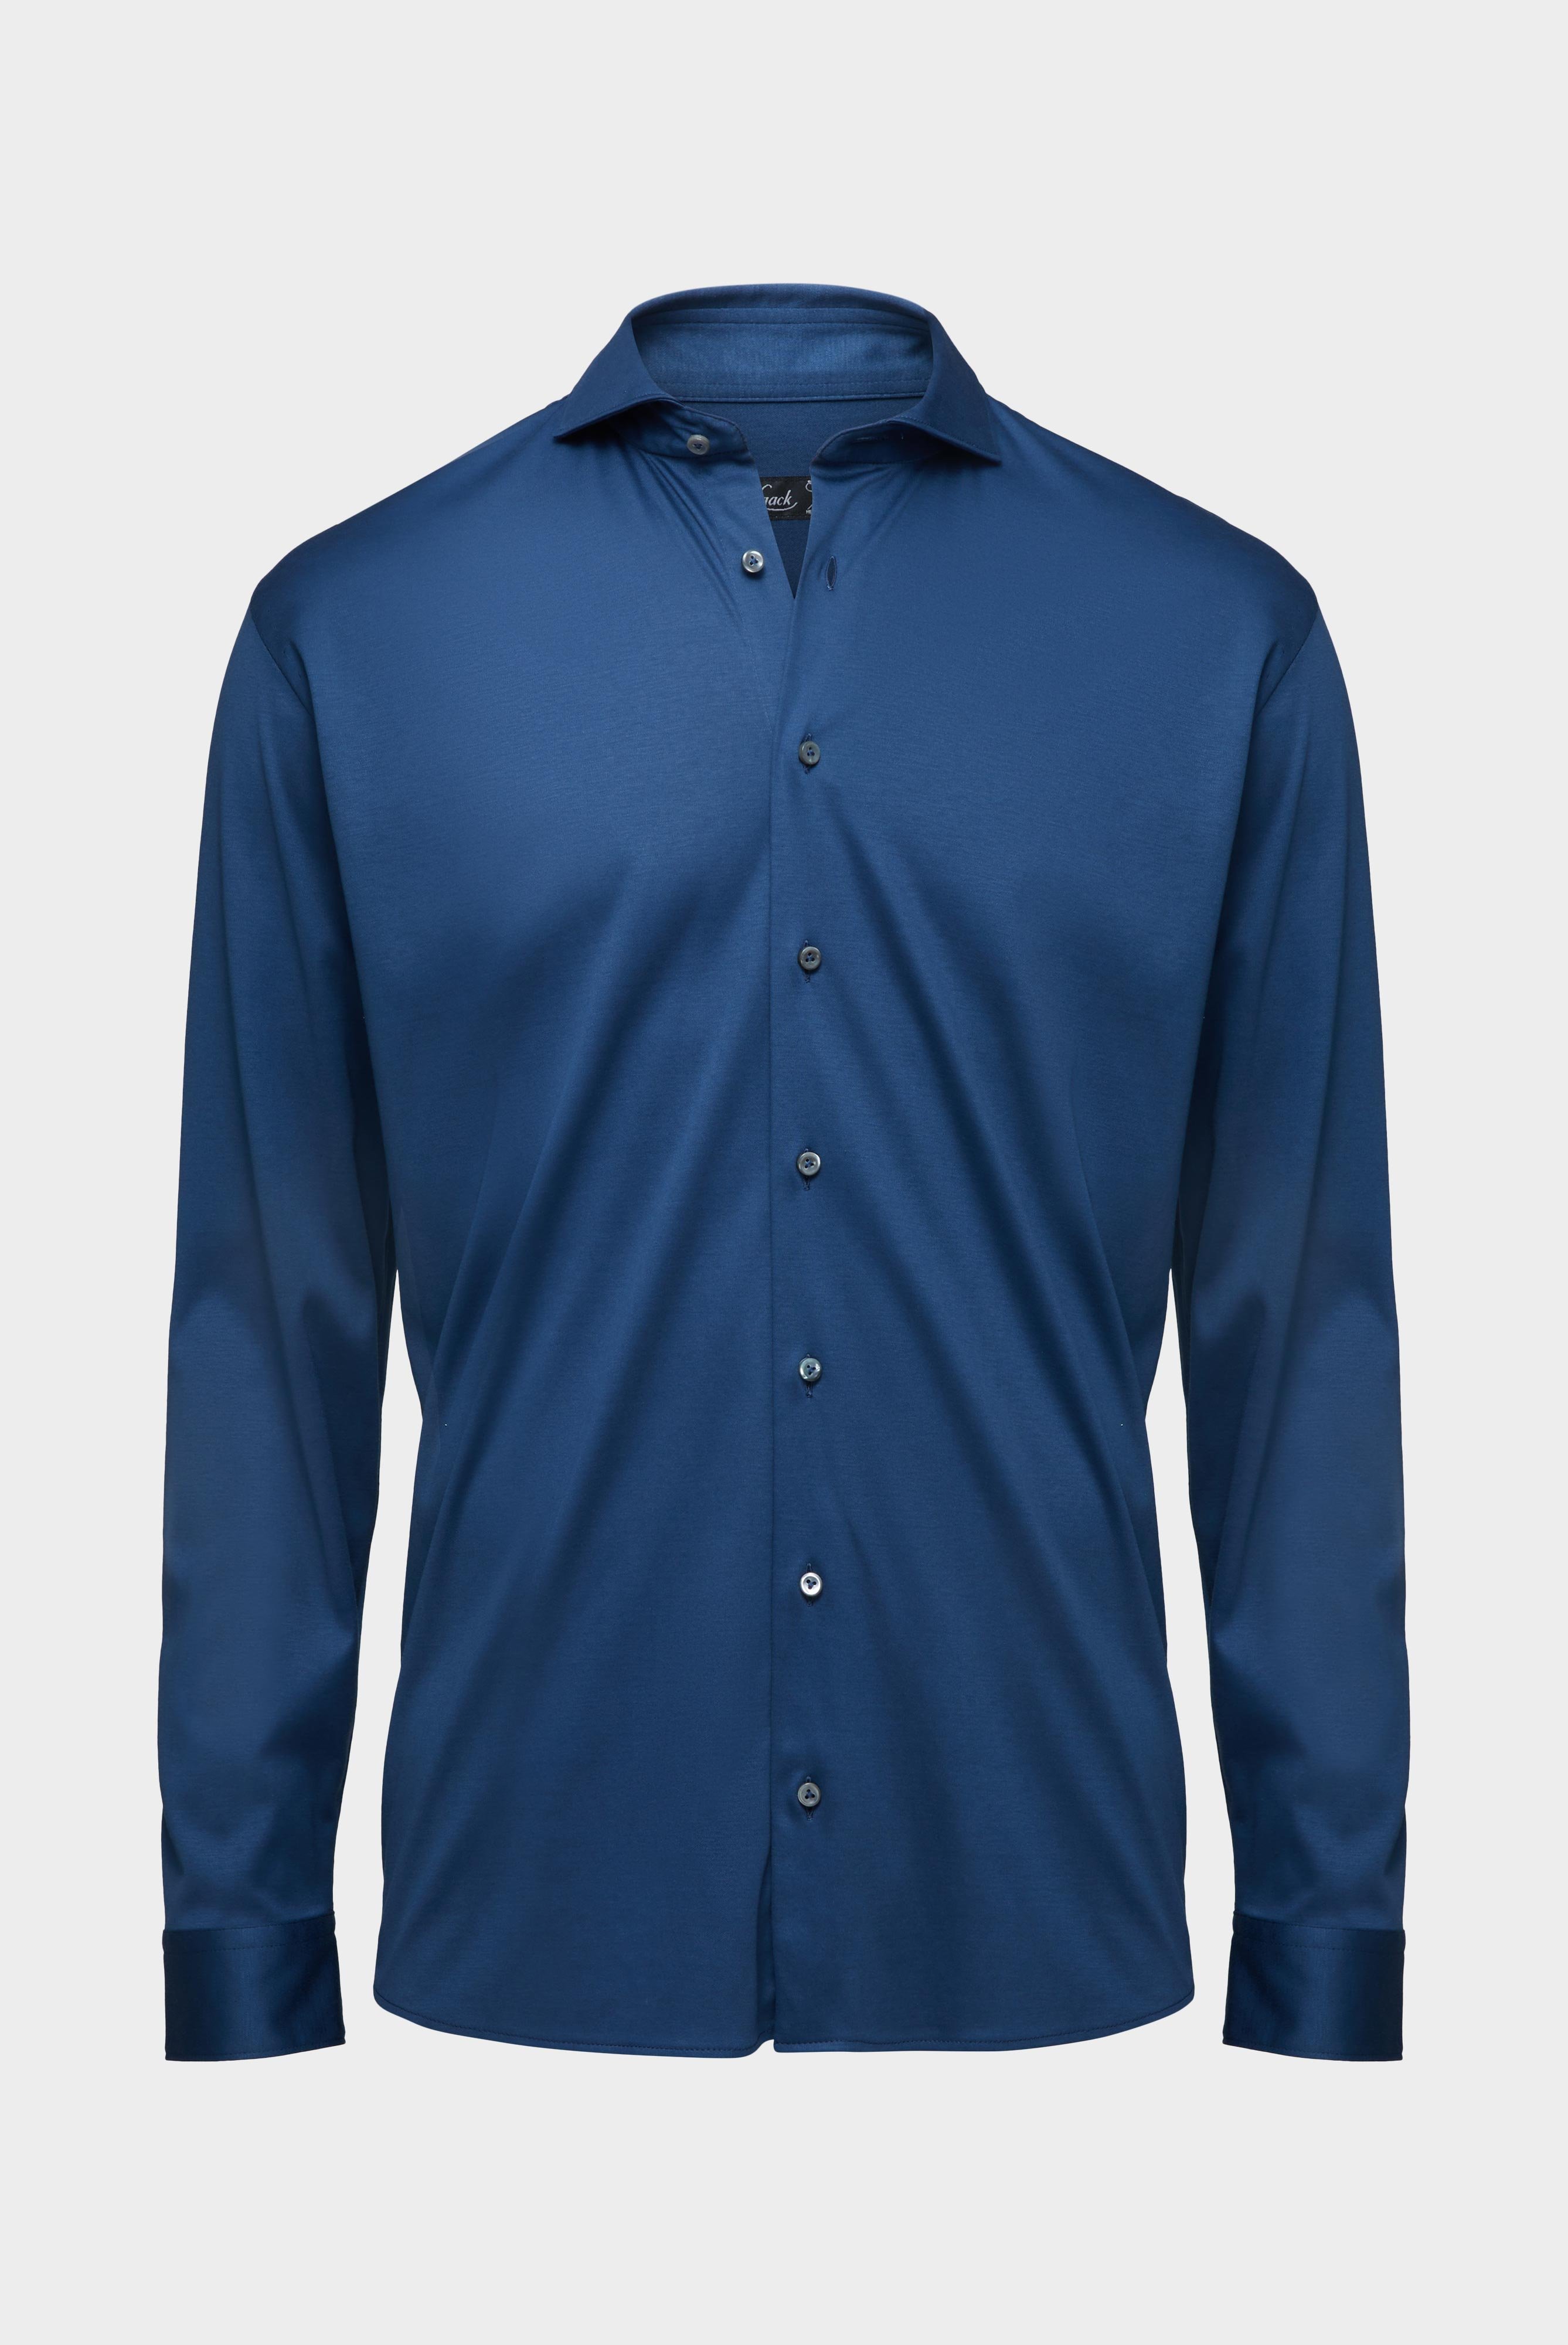 Casual Hemden+Jersey Hemd aus Schweizer Baumwolle Tailor Fit+20.1683.UC.180031.780.X4L